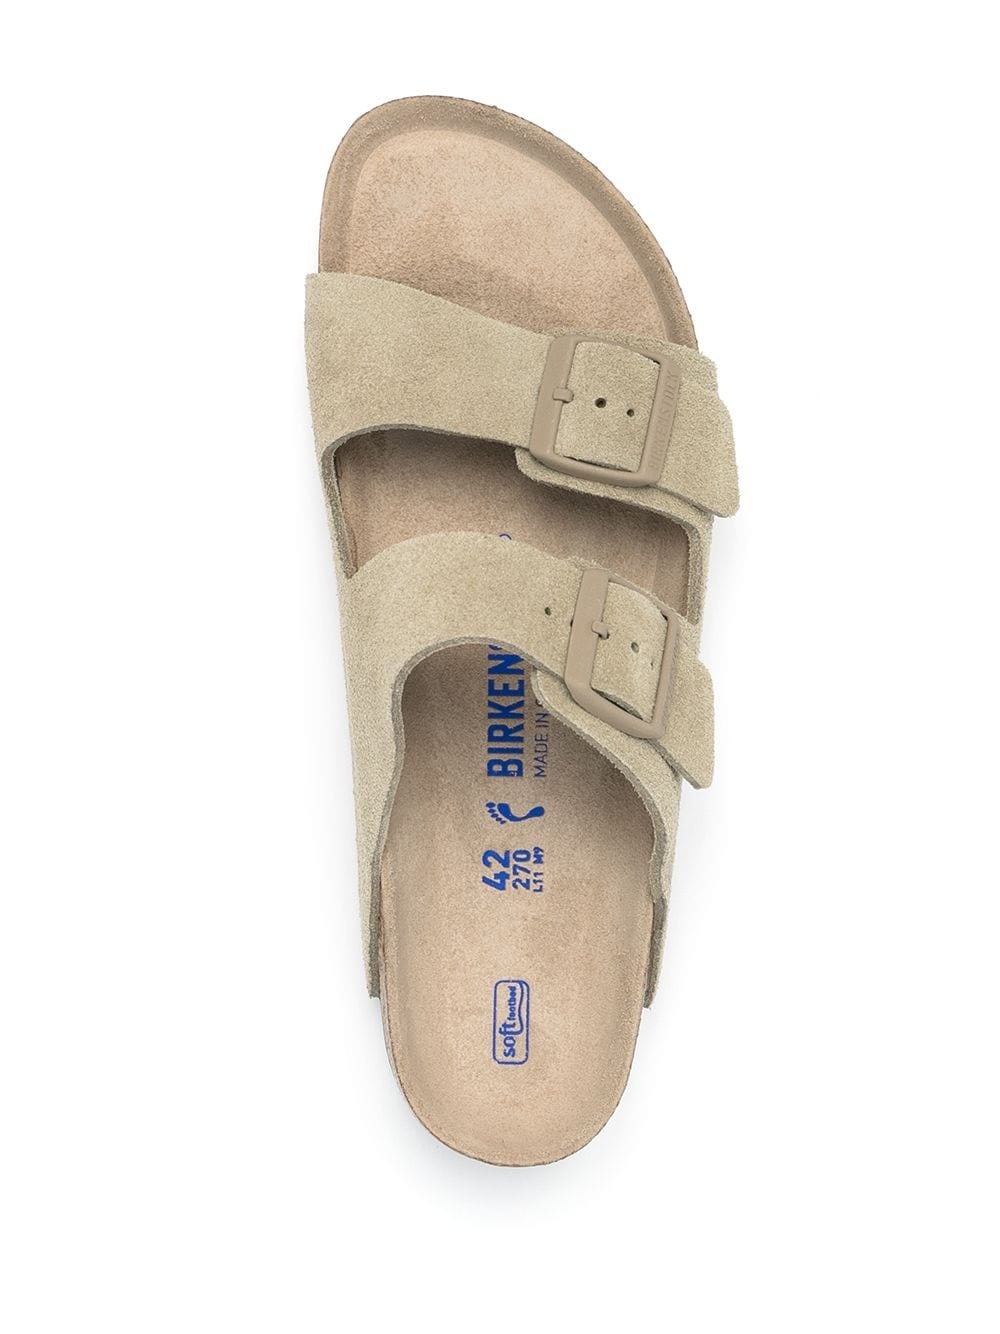 Arizona leather sandals - 4